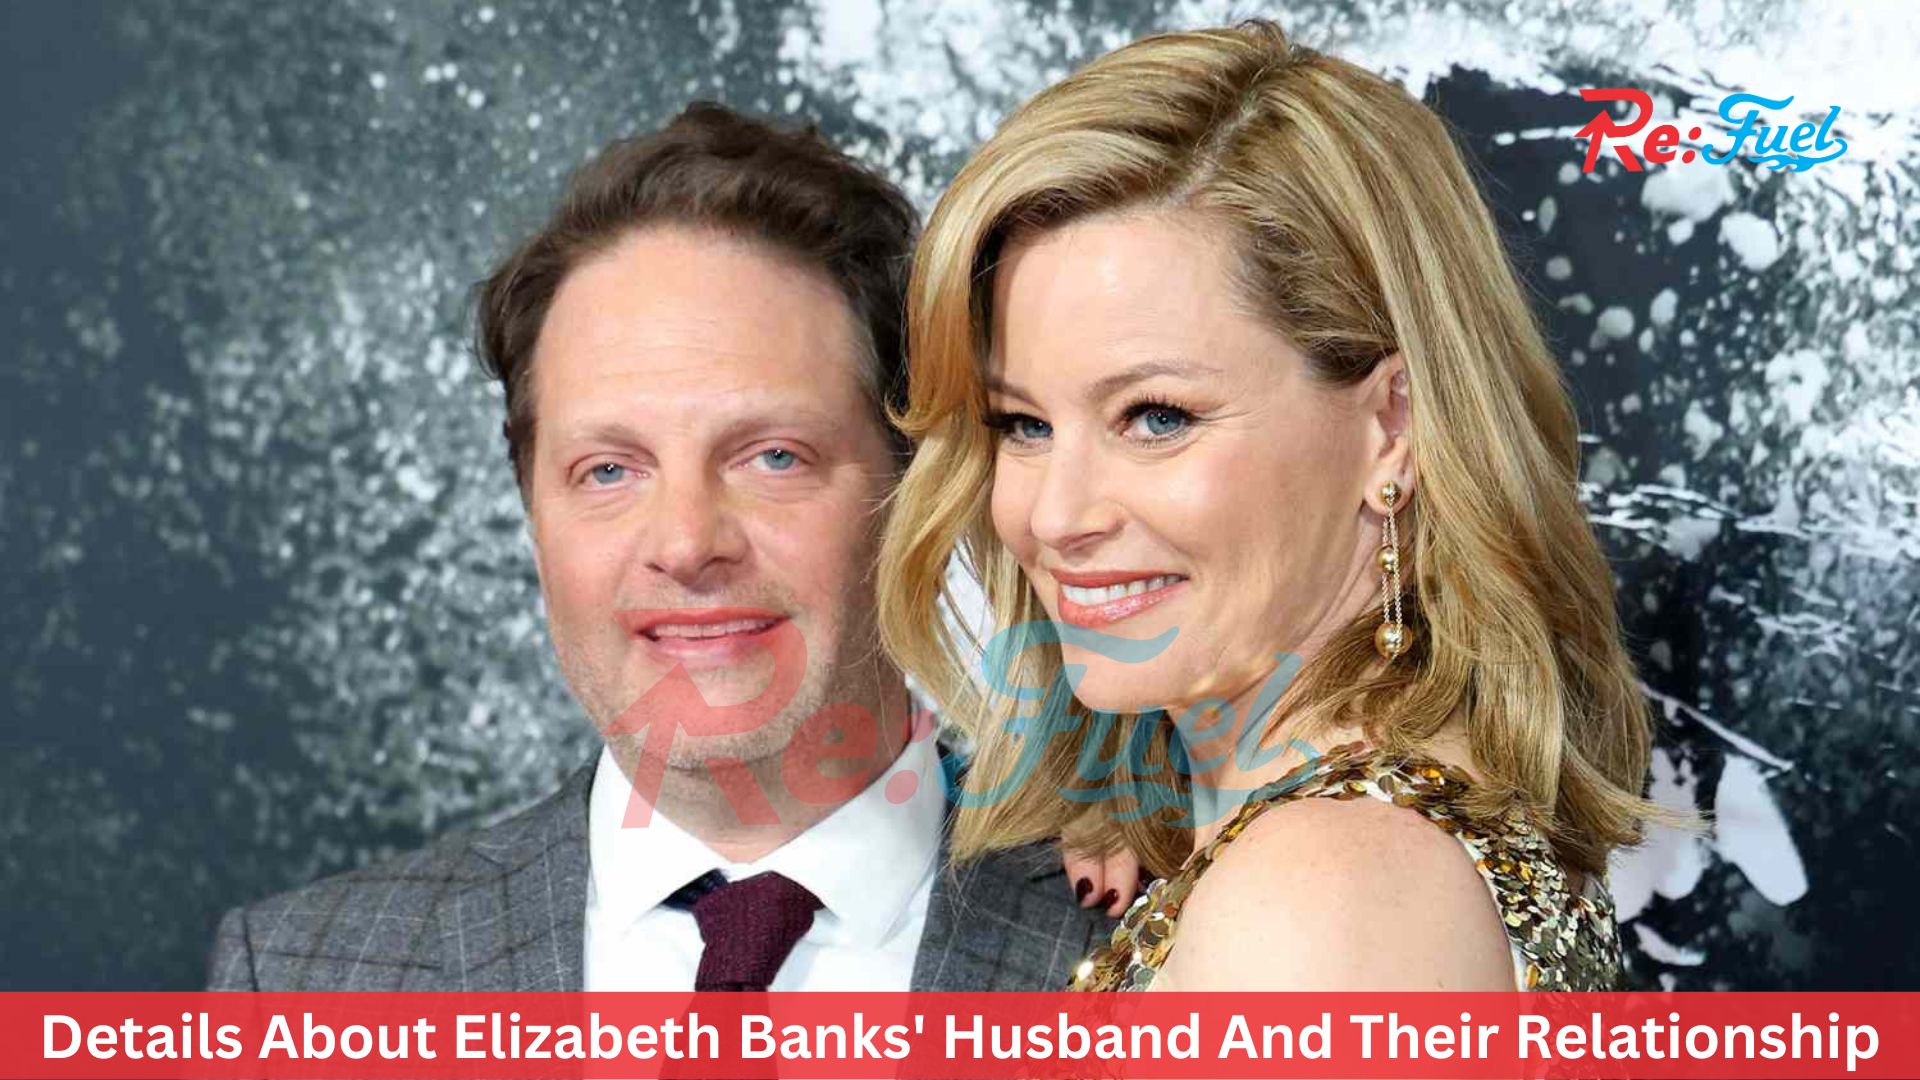 Details About Elizabeth Banks' Husband And Their Relationship